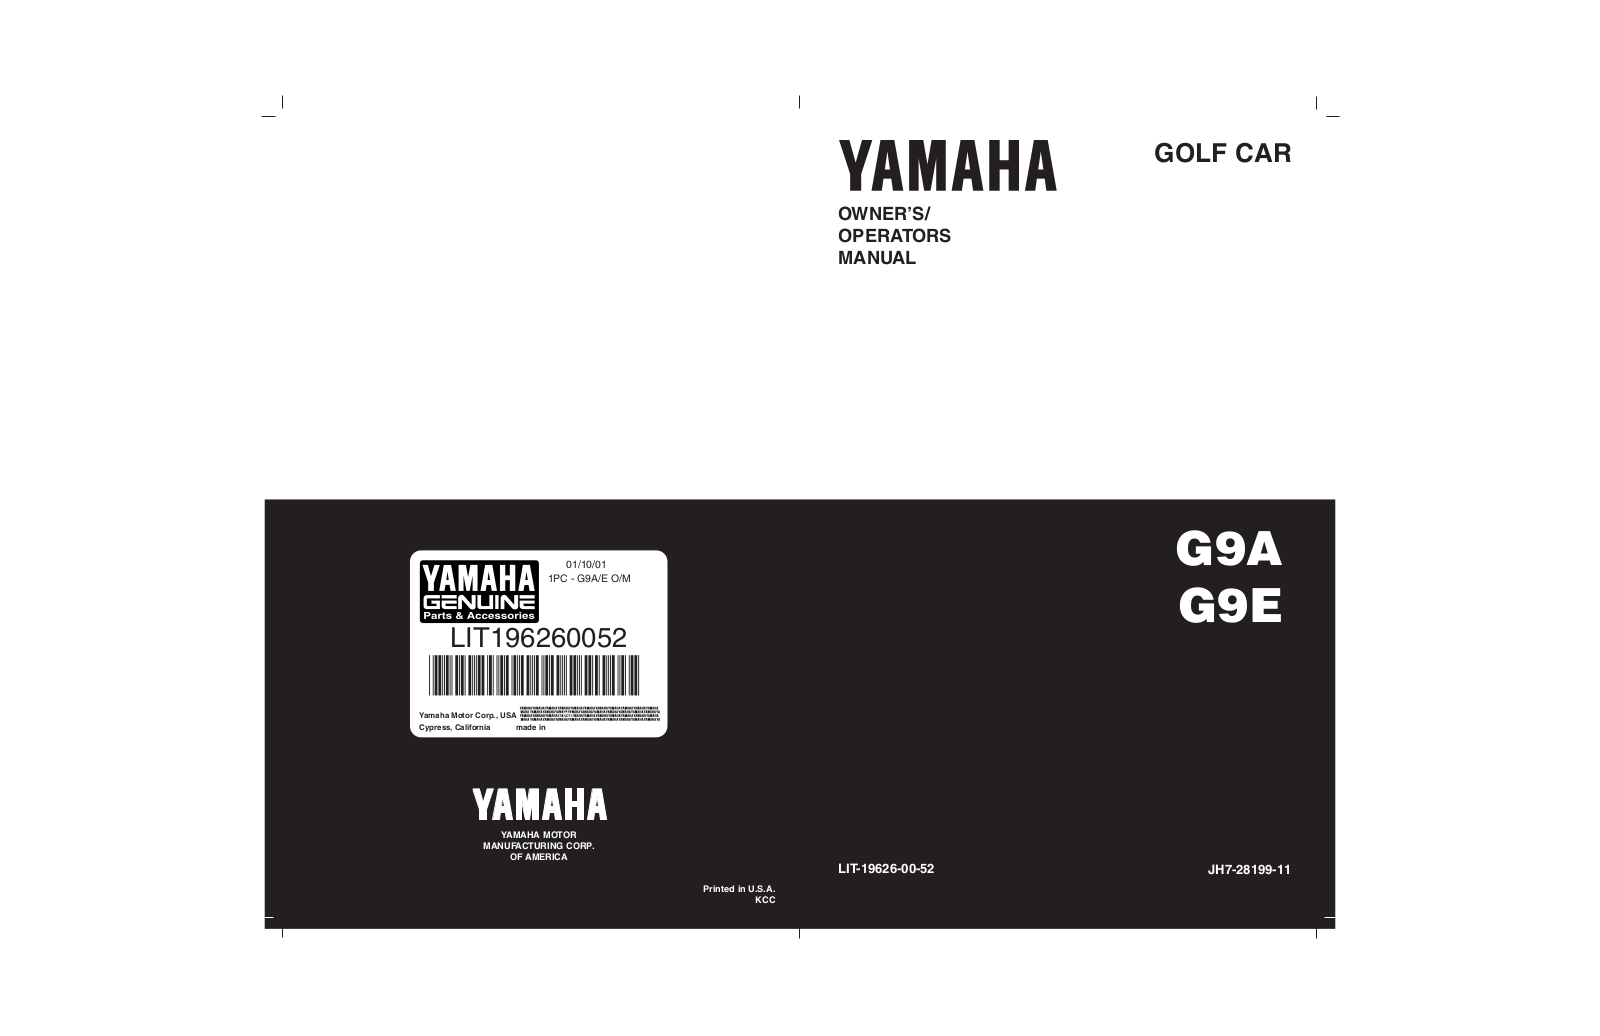 Yamaha FLEET MASTER 36 VOLT ELECTRIC-G9-EJ, G9A Manual